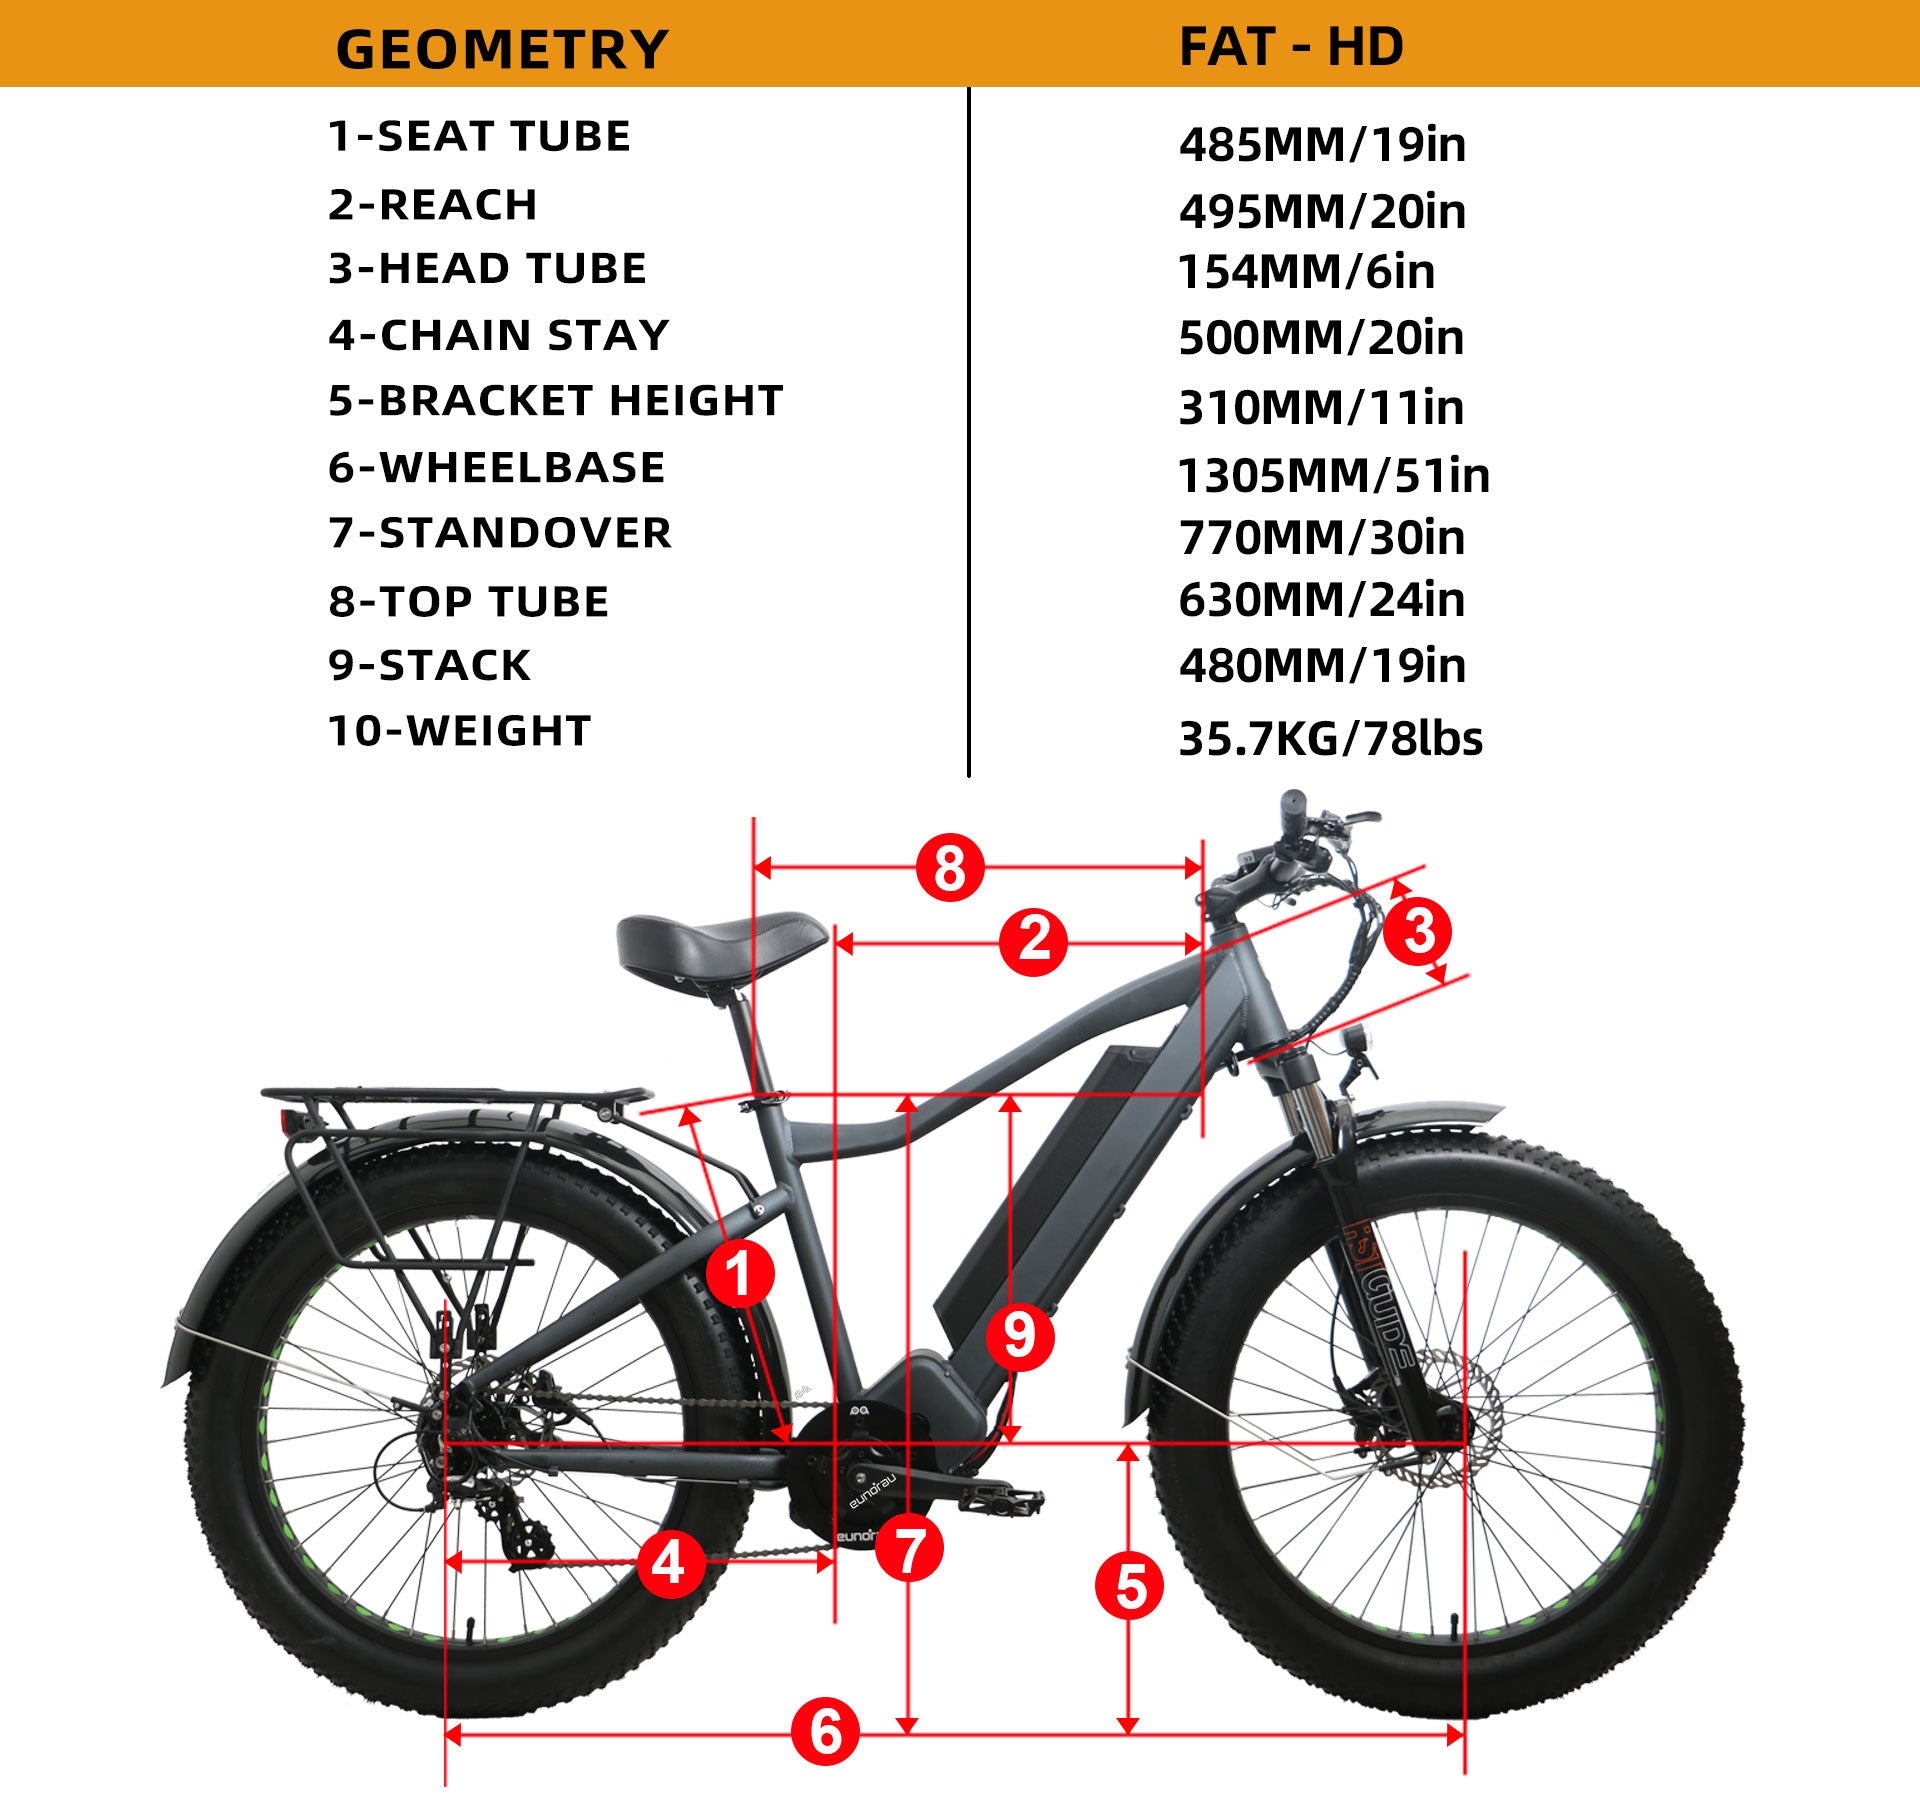 EUNORAU FAT-HD 1000W 48V Fat Tire Mountain Electric Bike